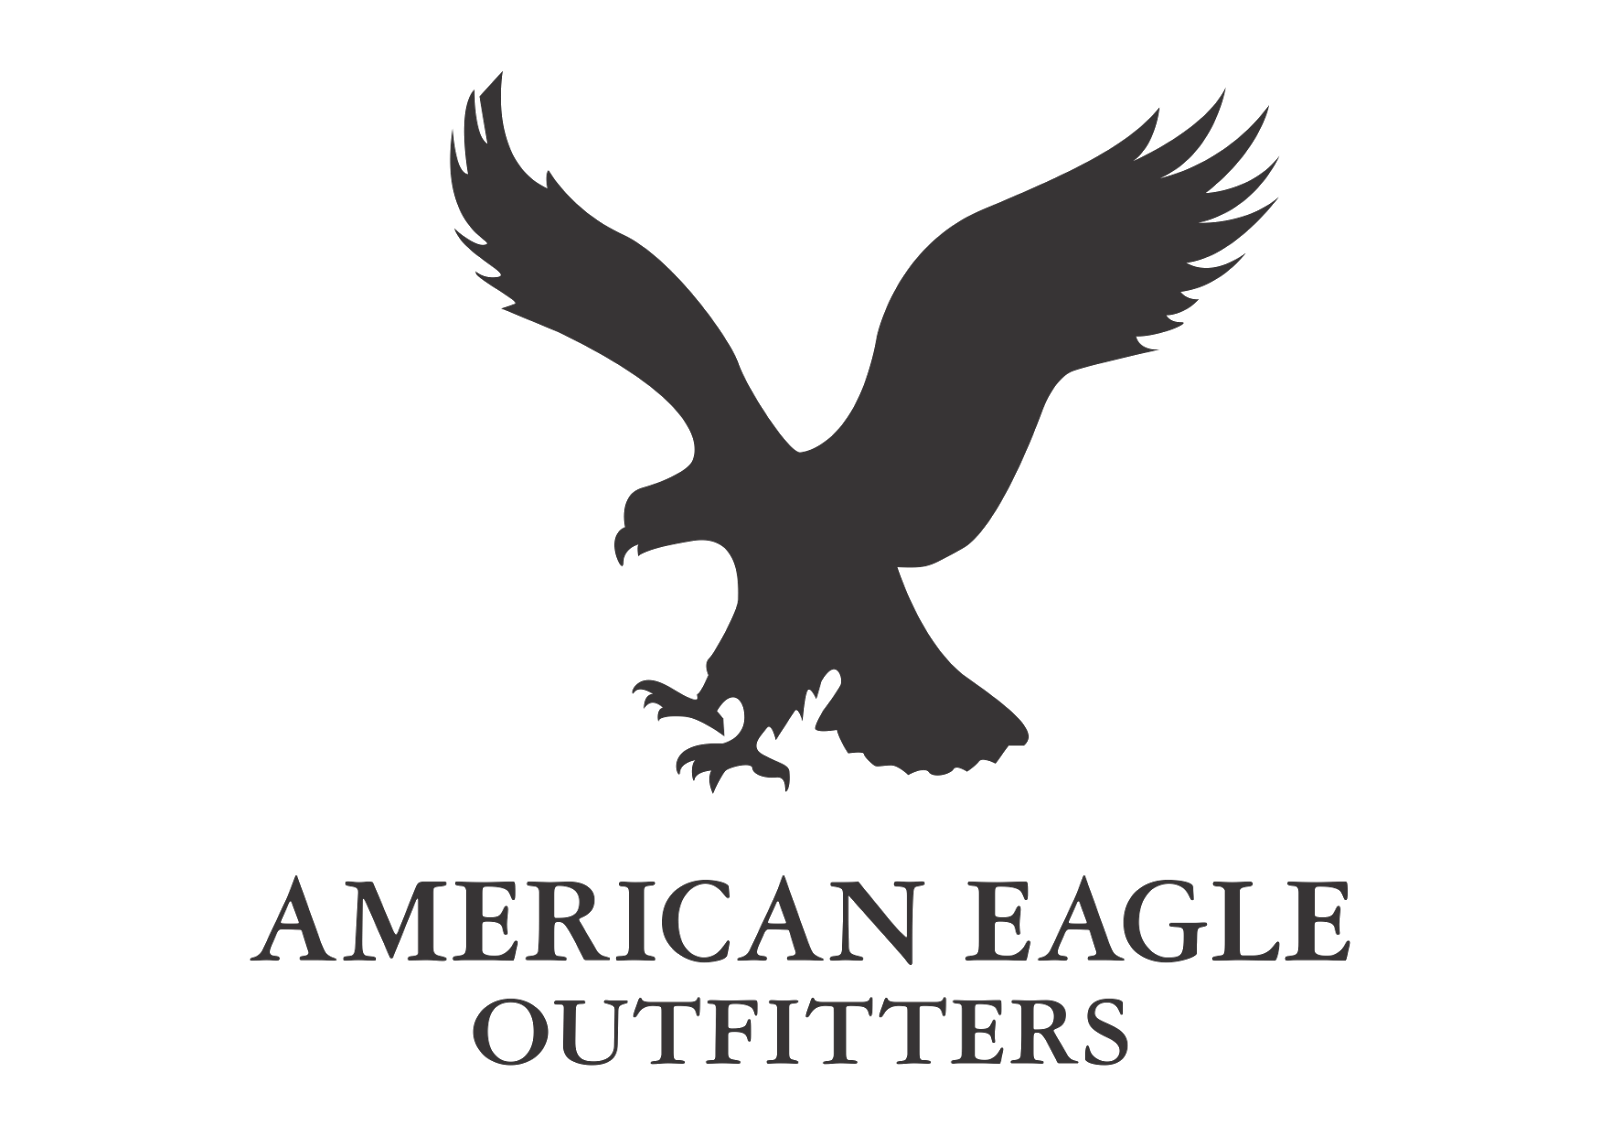 American eagle Logos